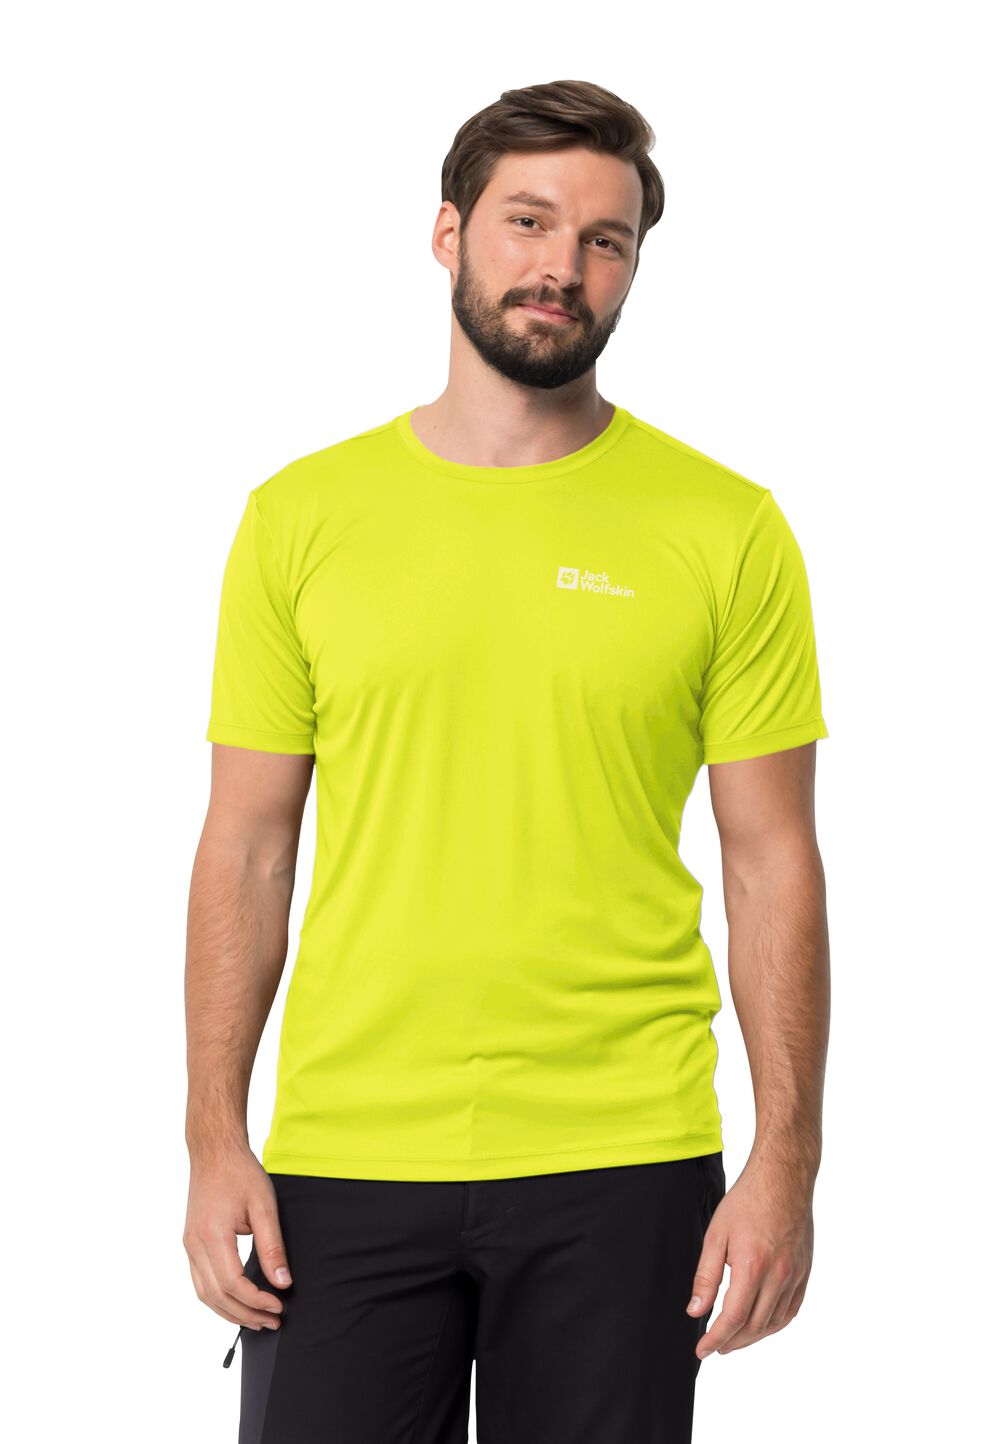 Jack Wolfskin Tech T-Shirt Men Functioneel shirt Heren XL oranje firefly